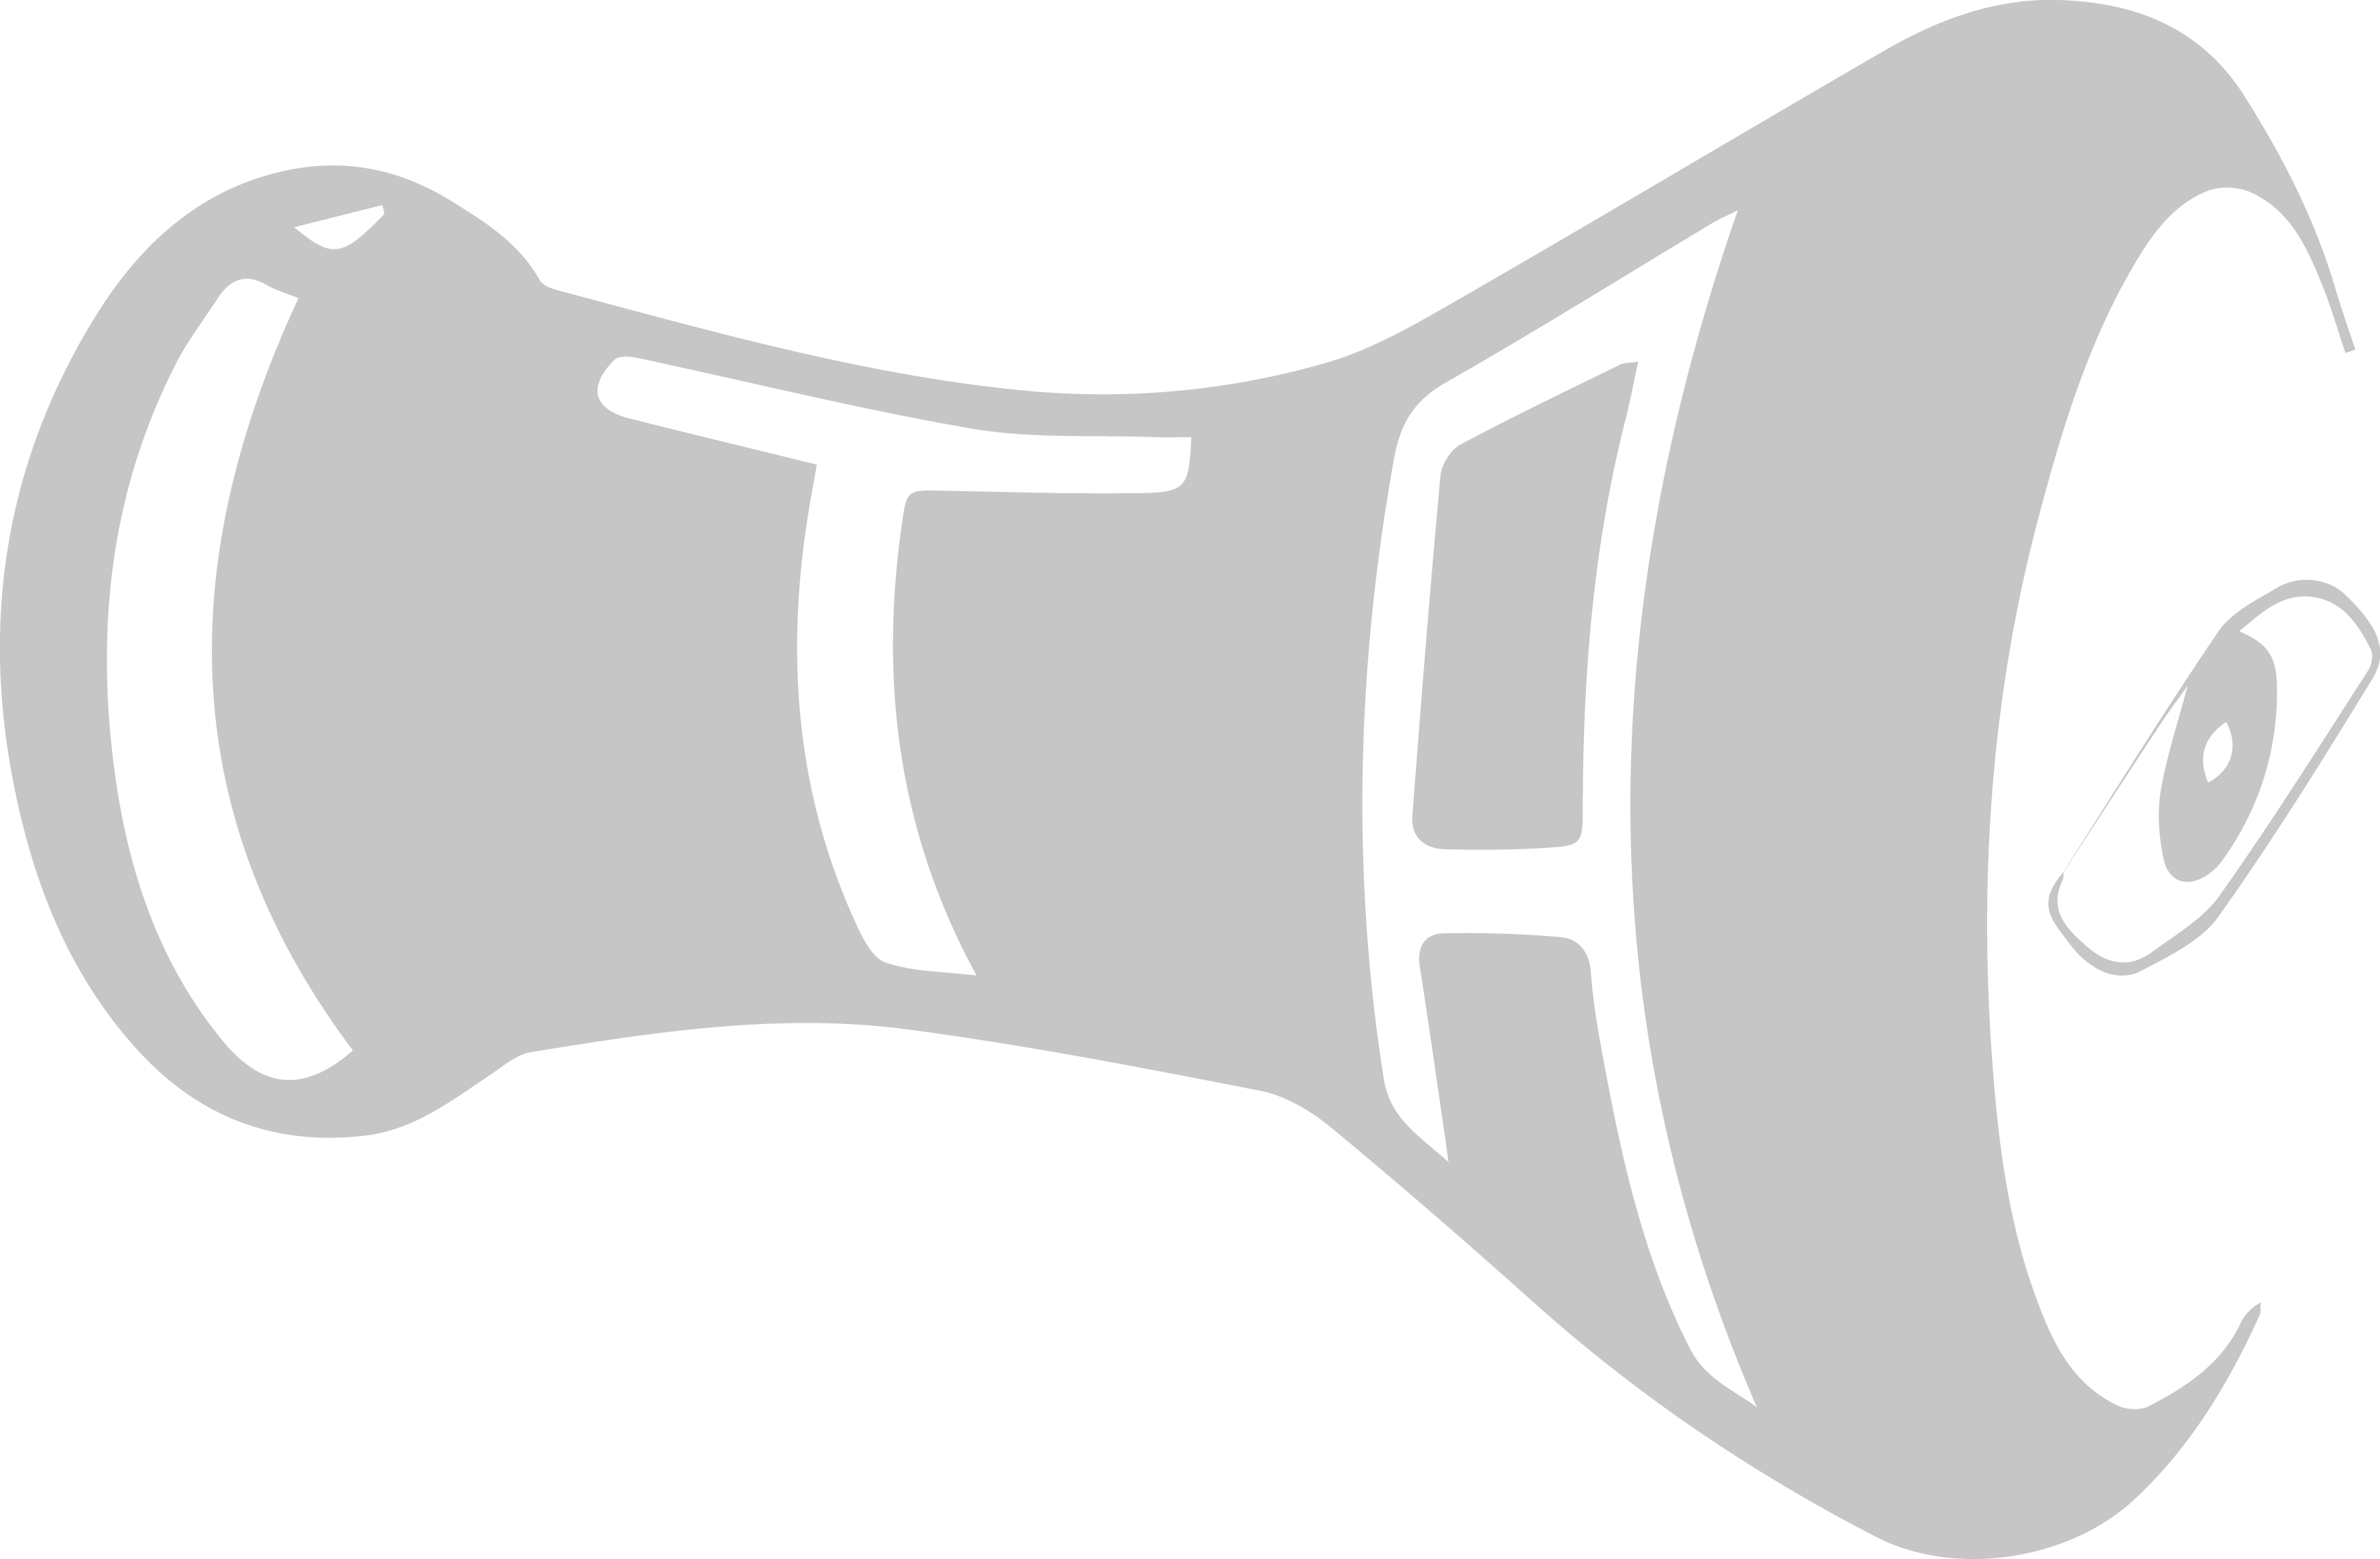 iritaca logo image